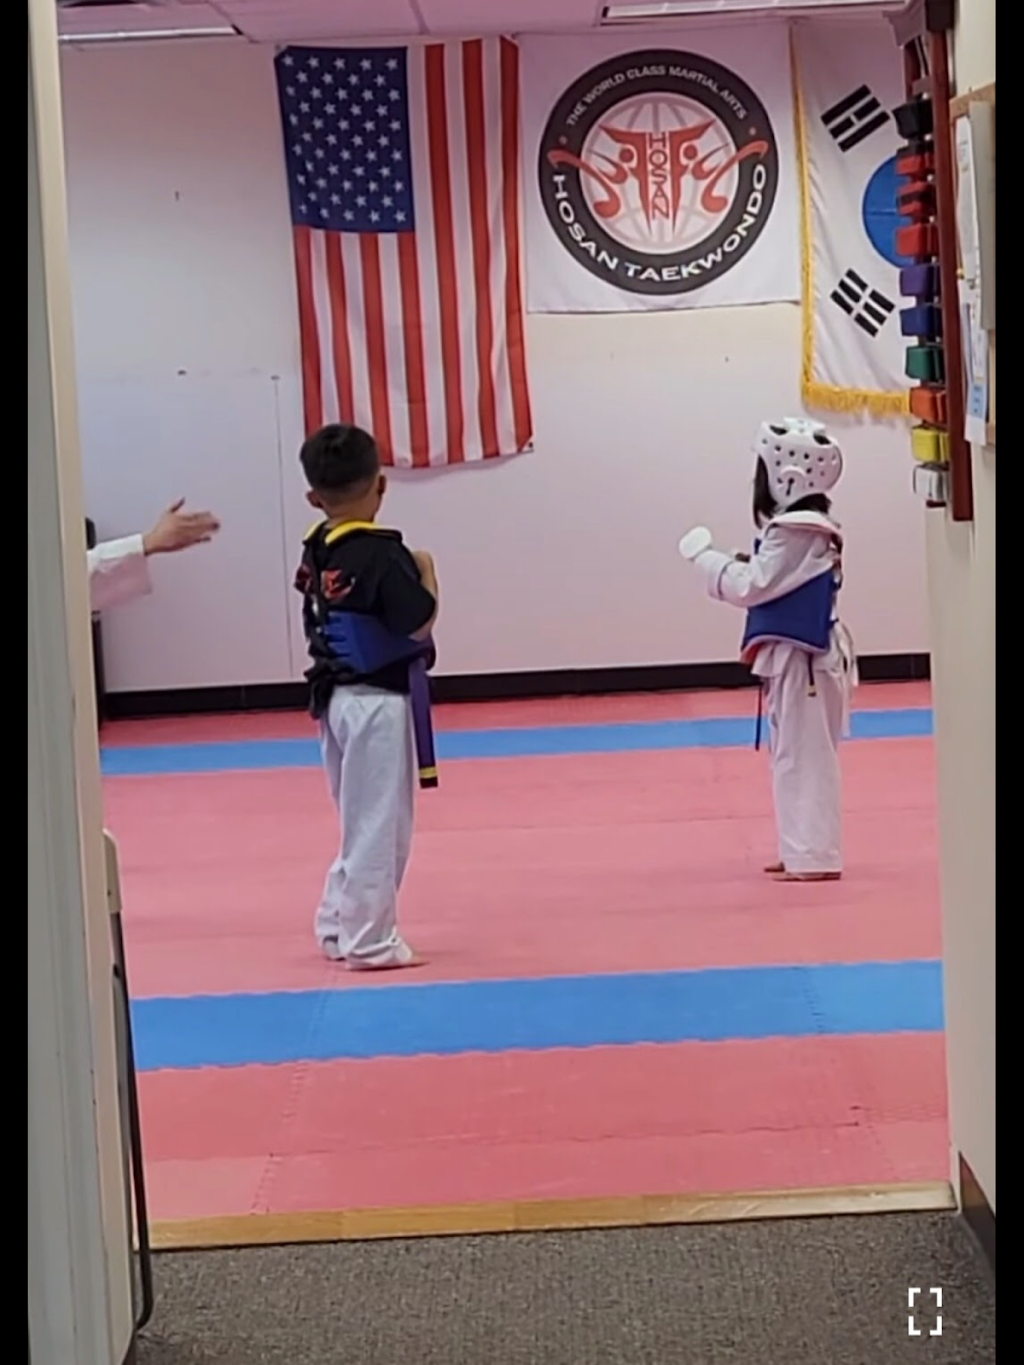 Hosan Taekwondo Cresskill | 350 Madison Ave 2nd Fl, Cresskill, NJ 07626 | Phone: (201) 567-1472